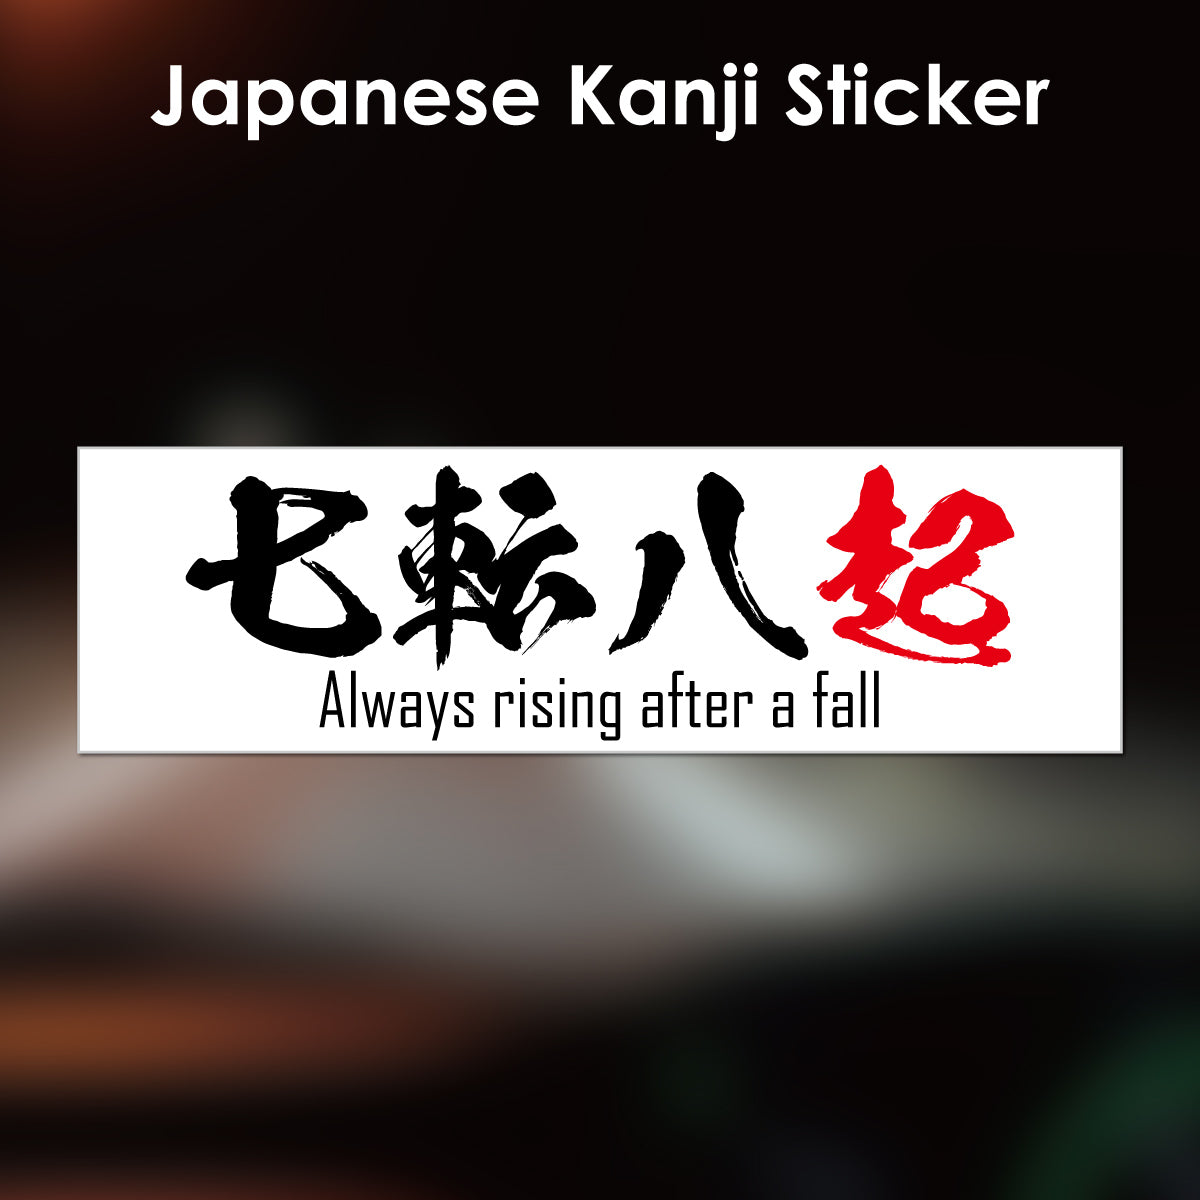 Japanese Kanji Sticker "Nanakorobiyaoki/Always rising after a fall" rectangle shape PVC 15x4.4cm original design from Japan Retro